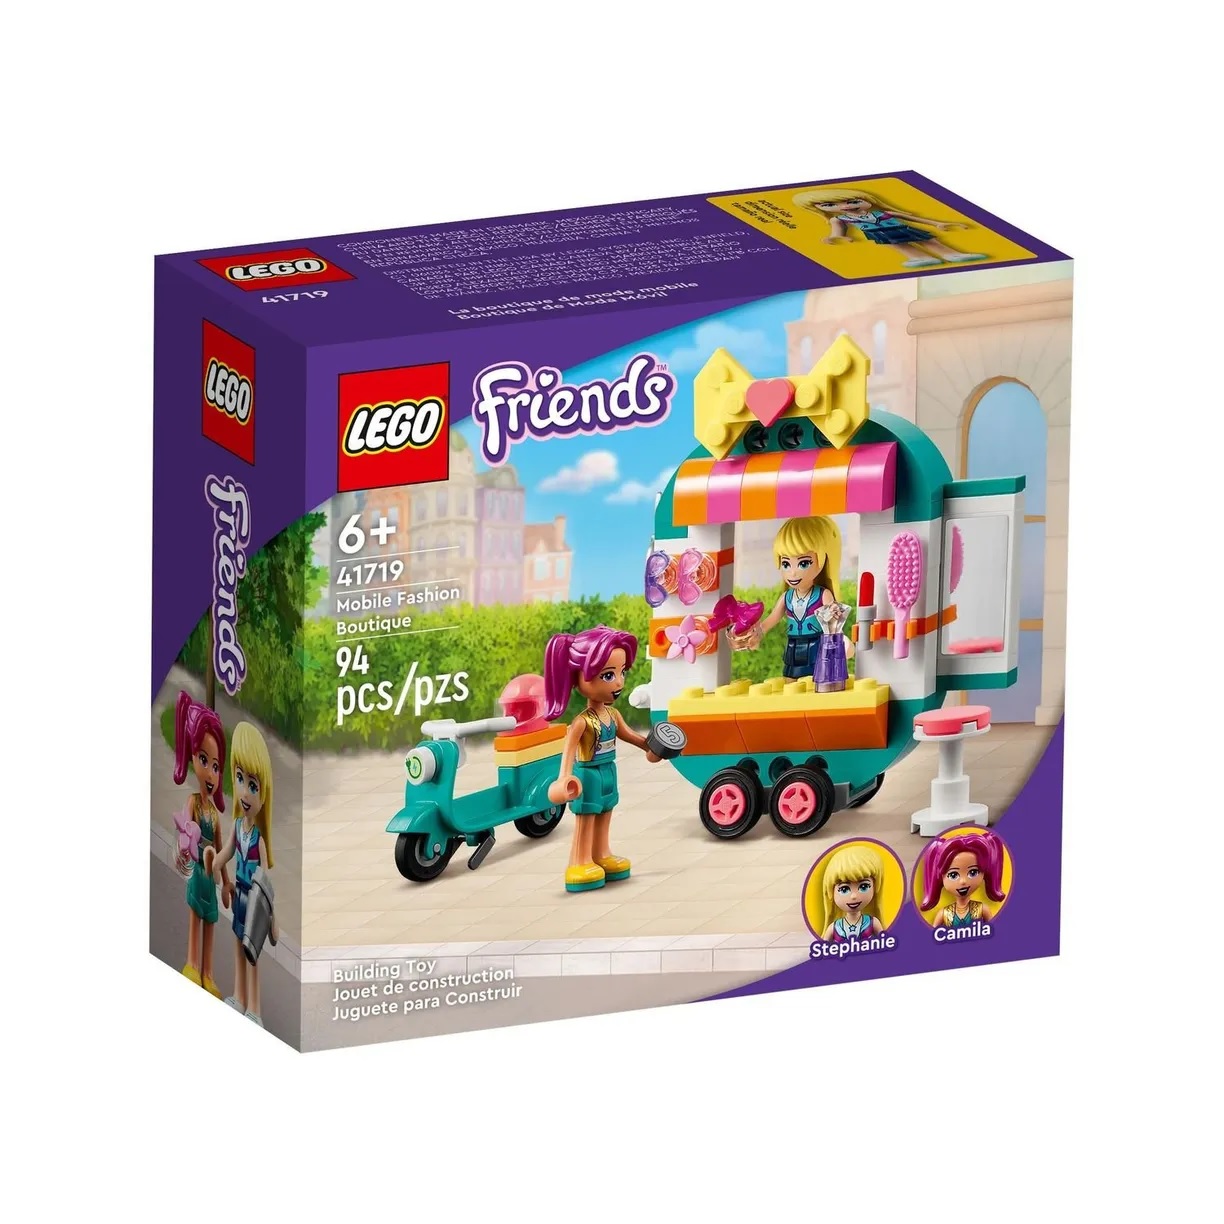 Lego Friends 41719 Мобильный салон красоты